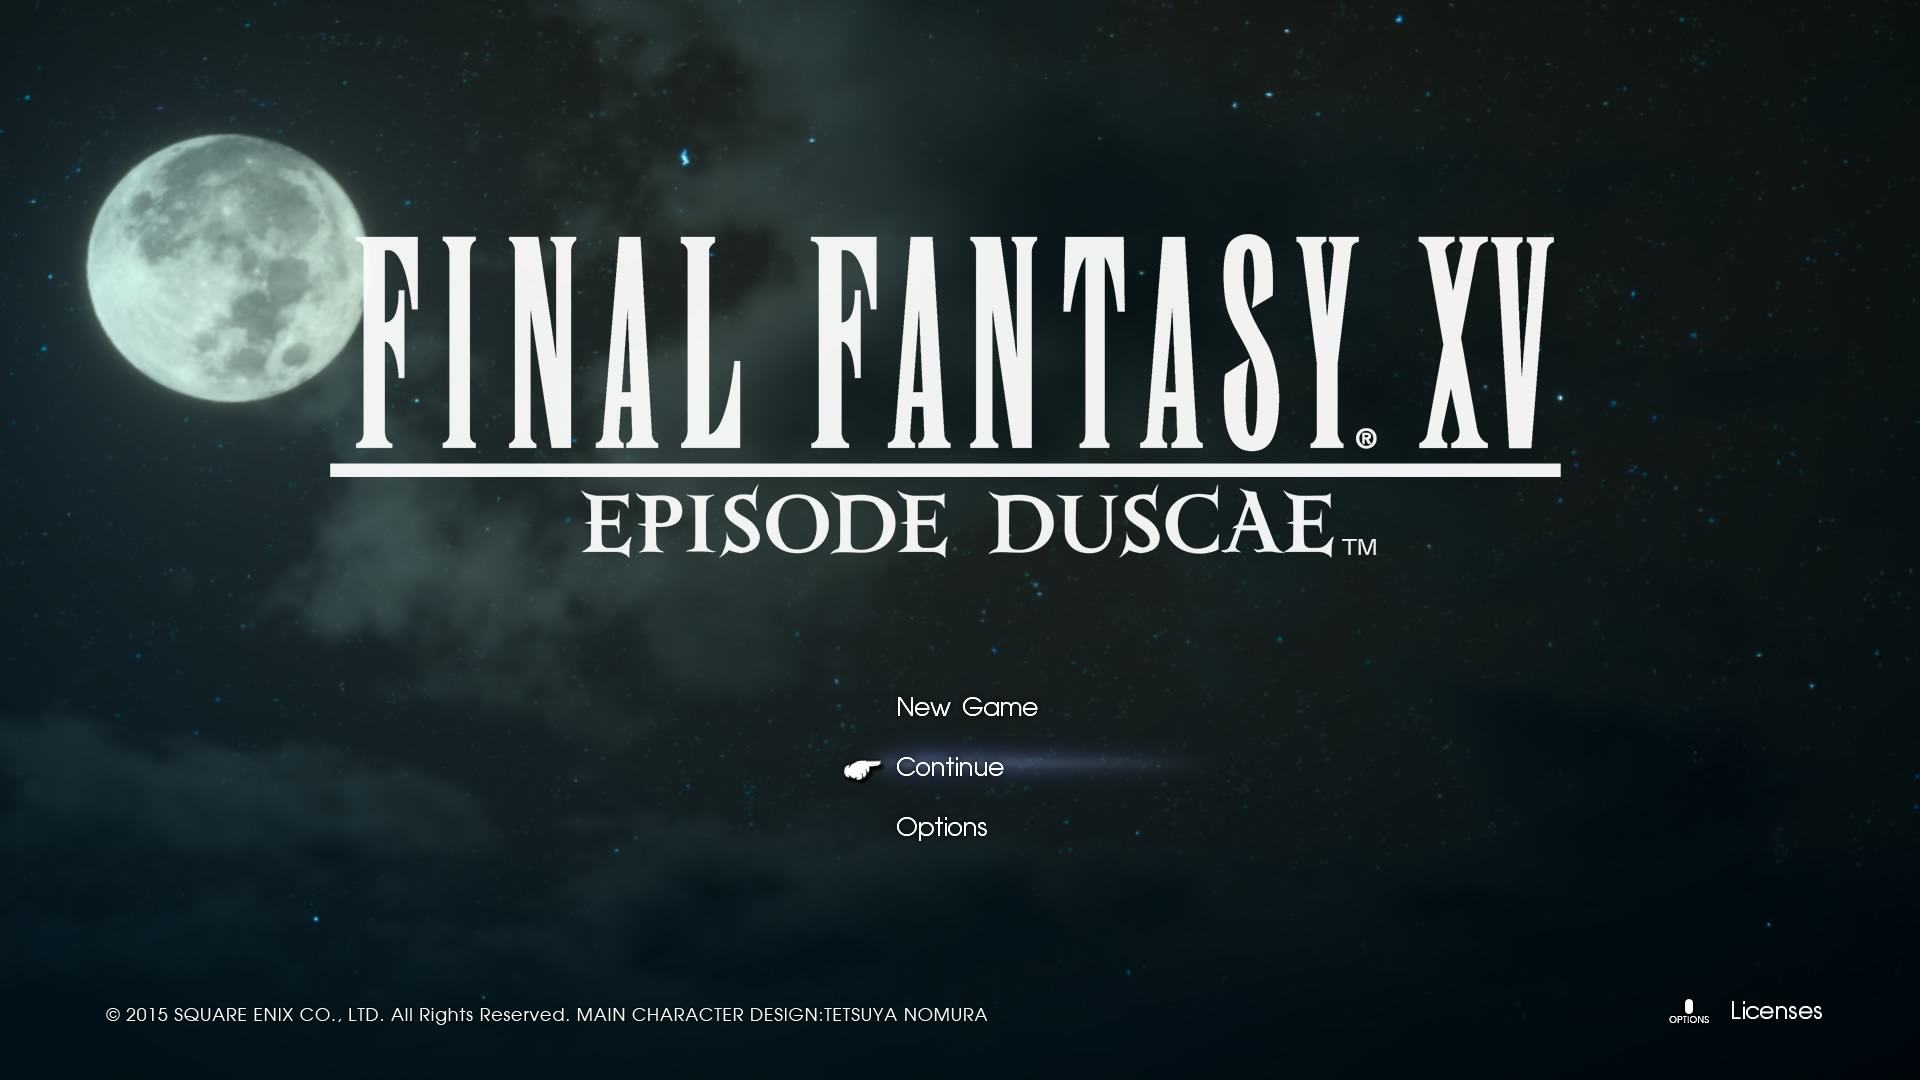 'Final Fantasy XV' -Episode Duscae- PS4 demo